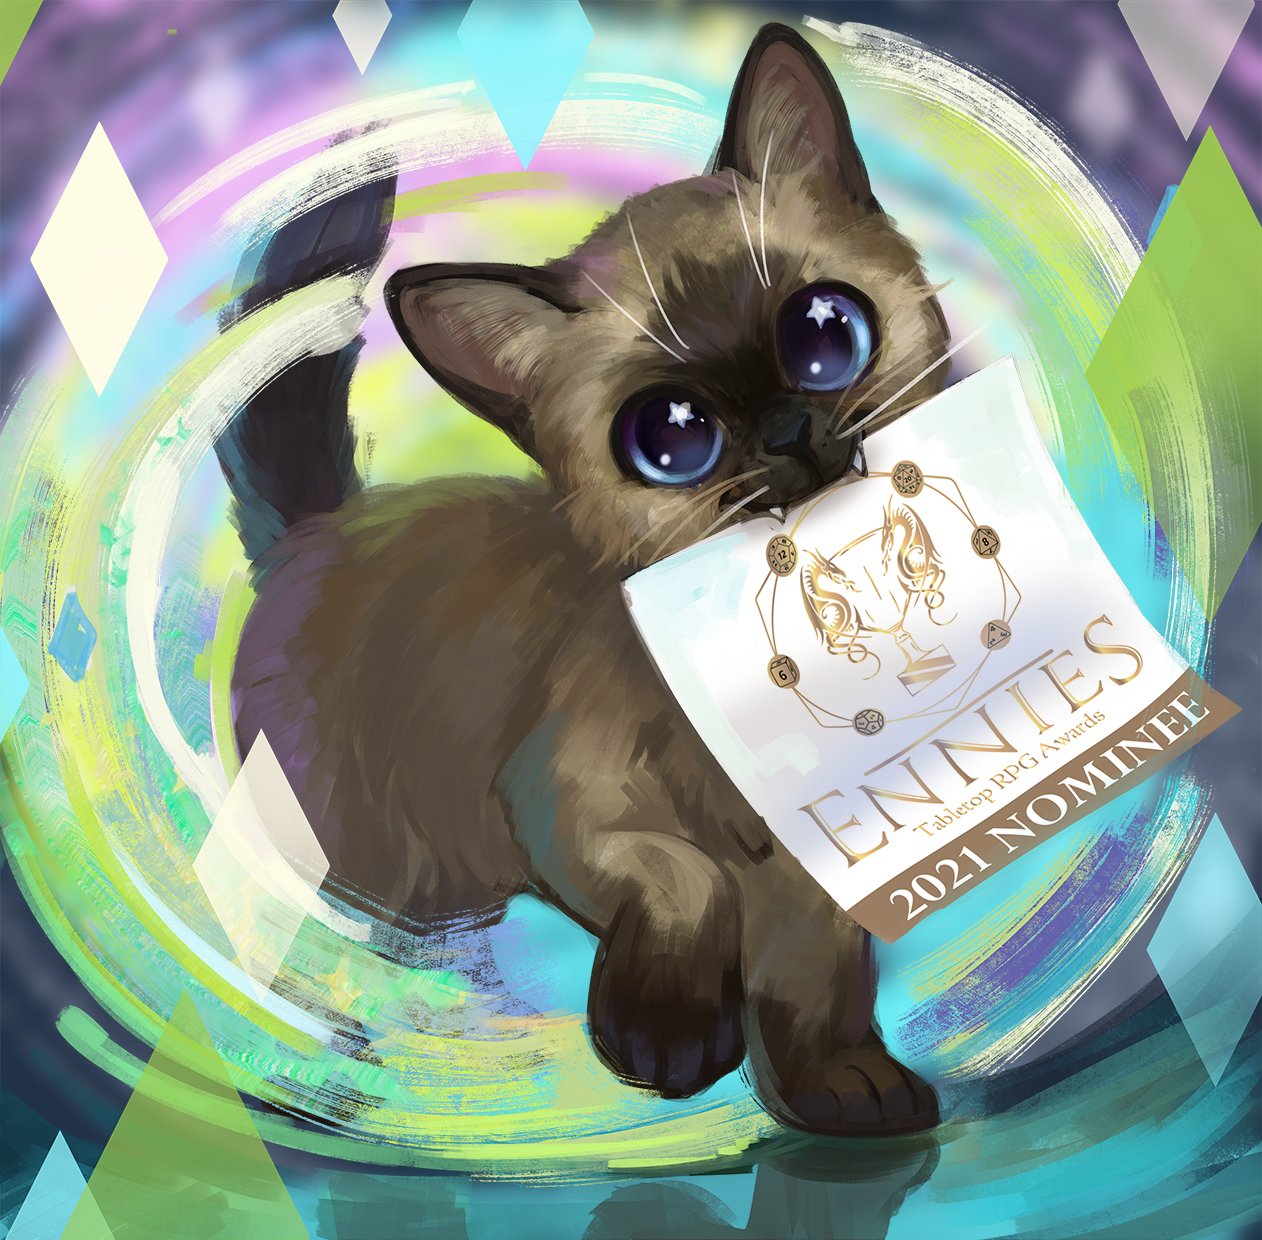 Help Magical Kitties Save the ENnies!